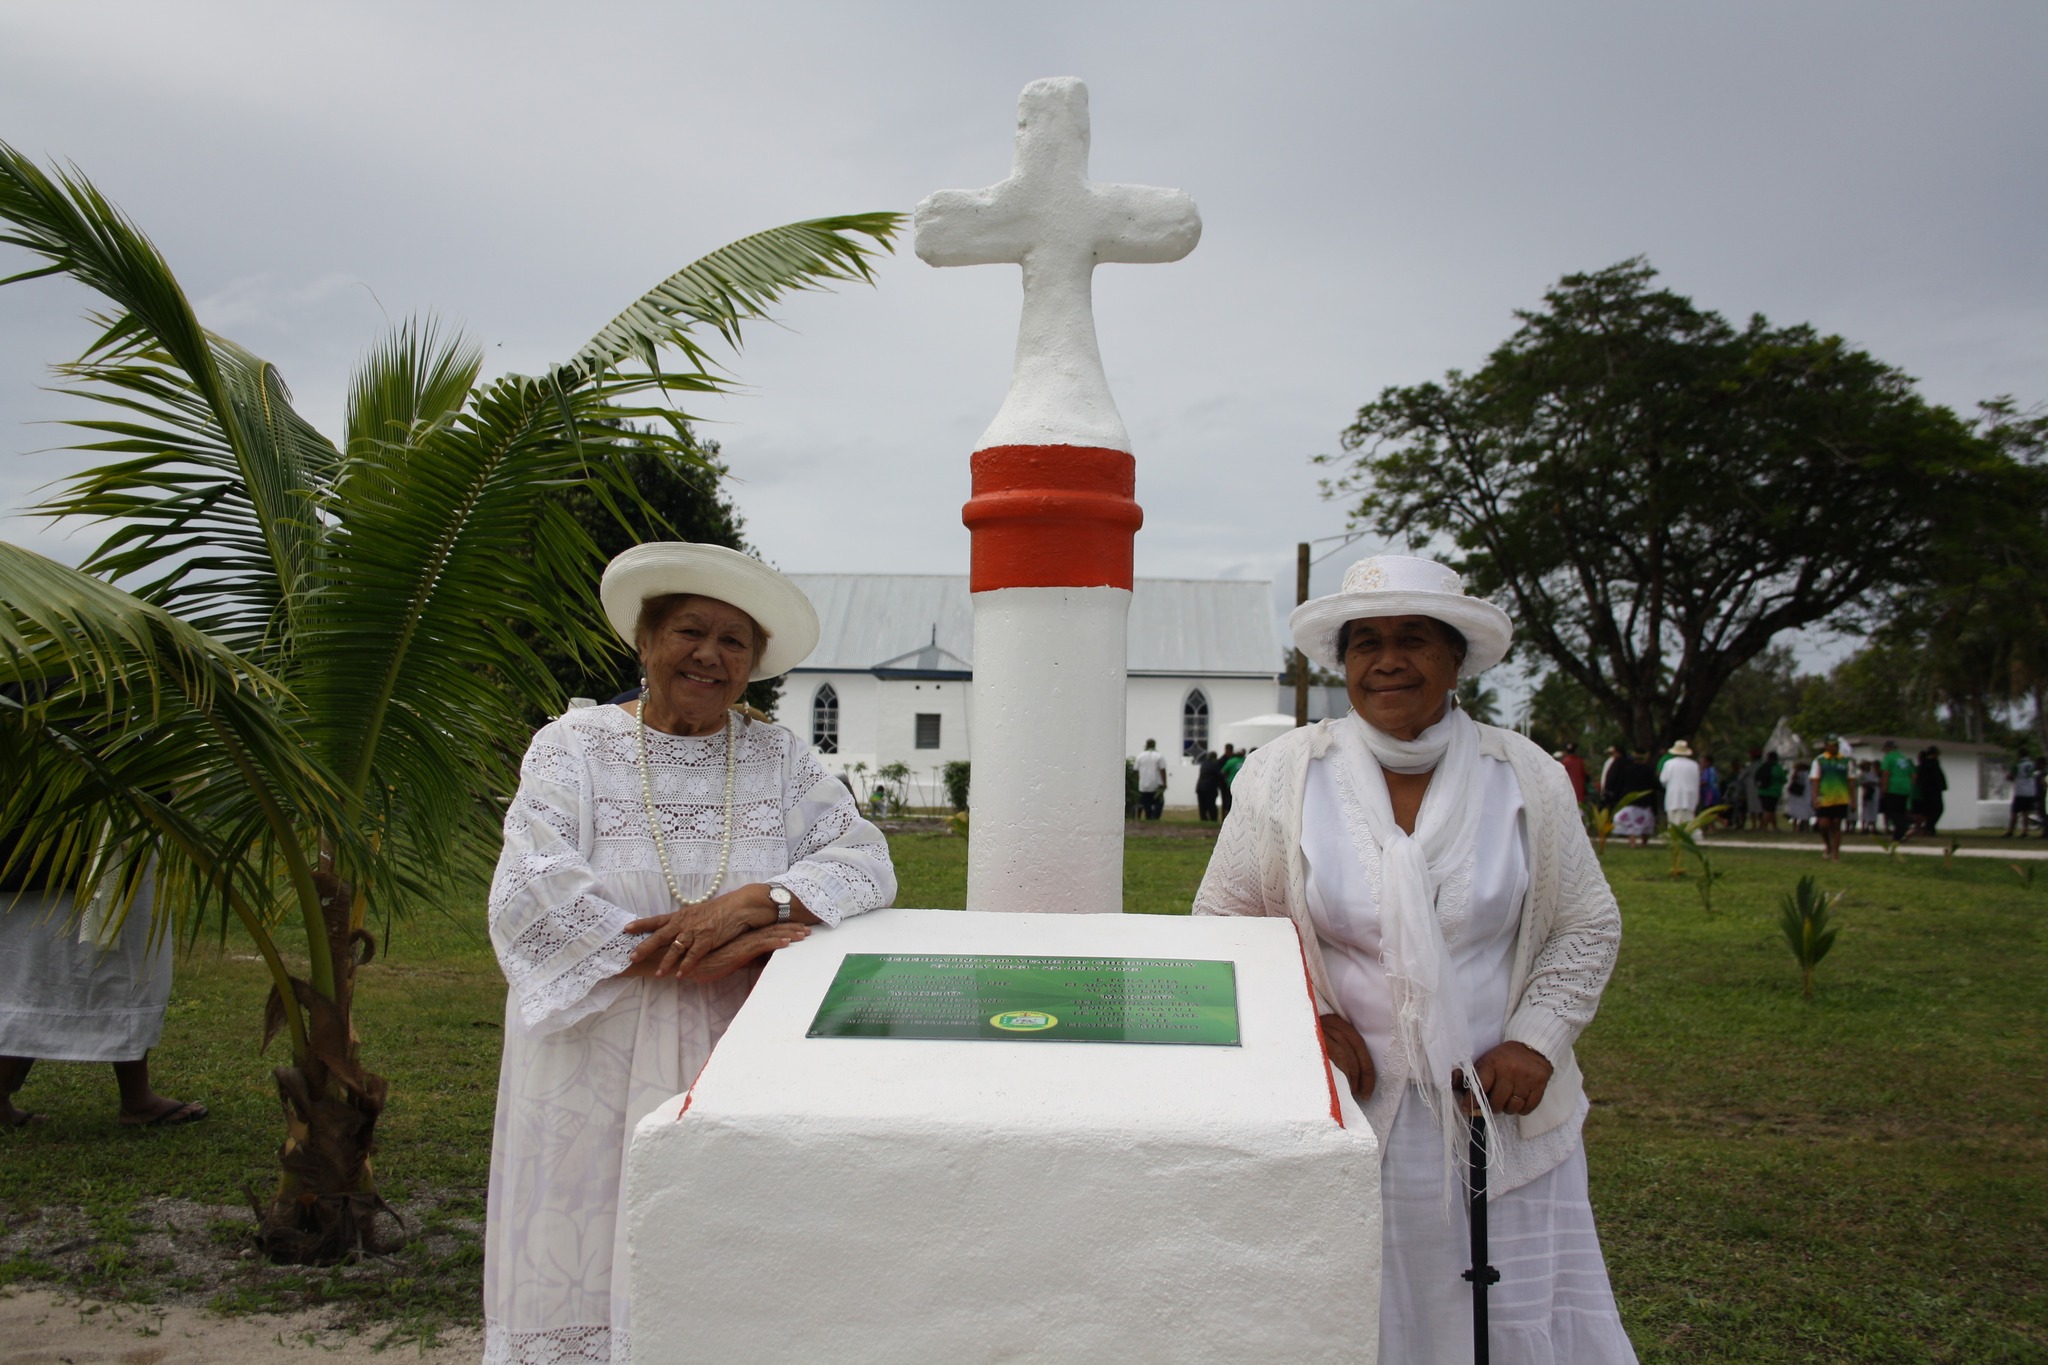 Nukuroa and Akatokamanava commemorate 200 years of Gospel